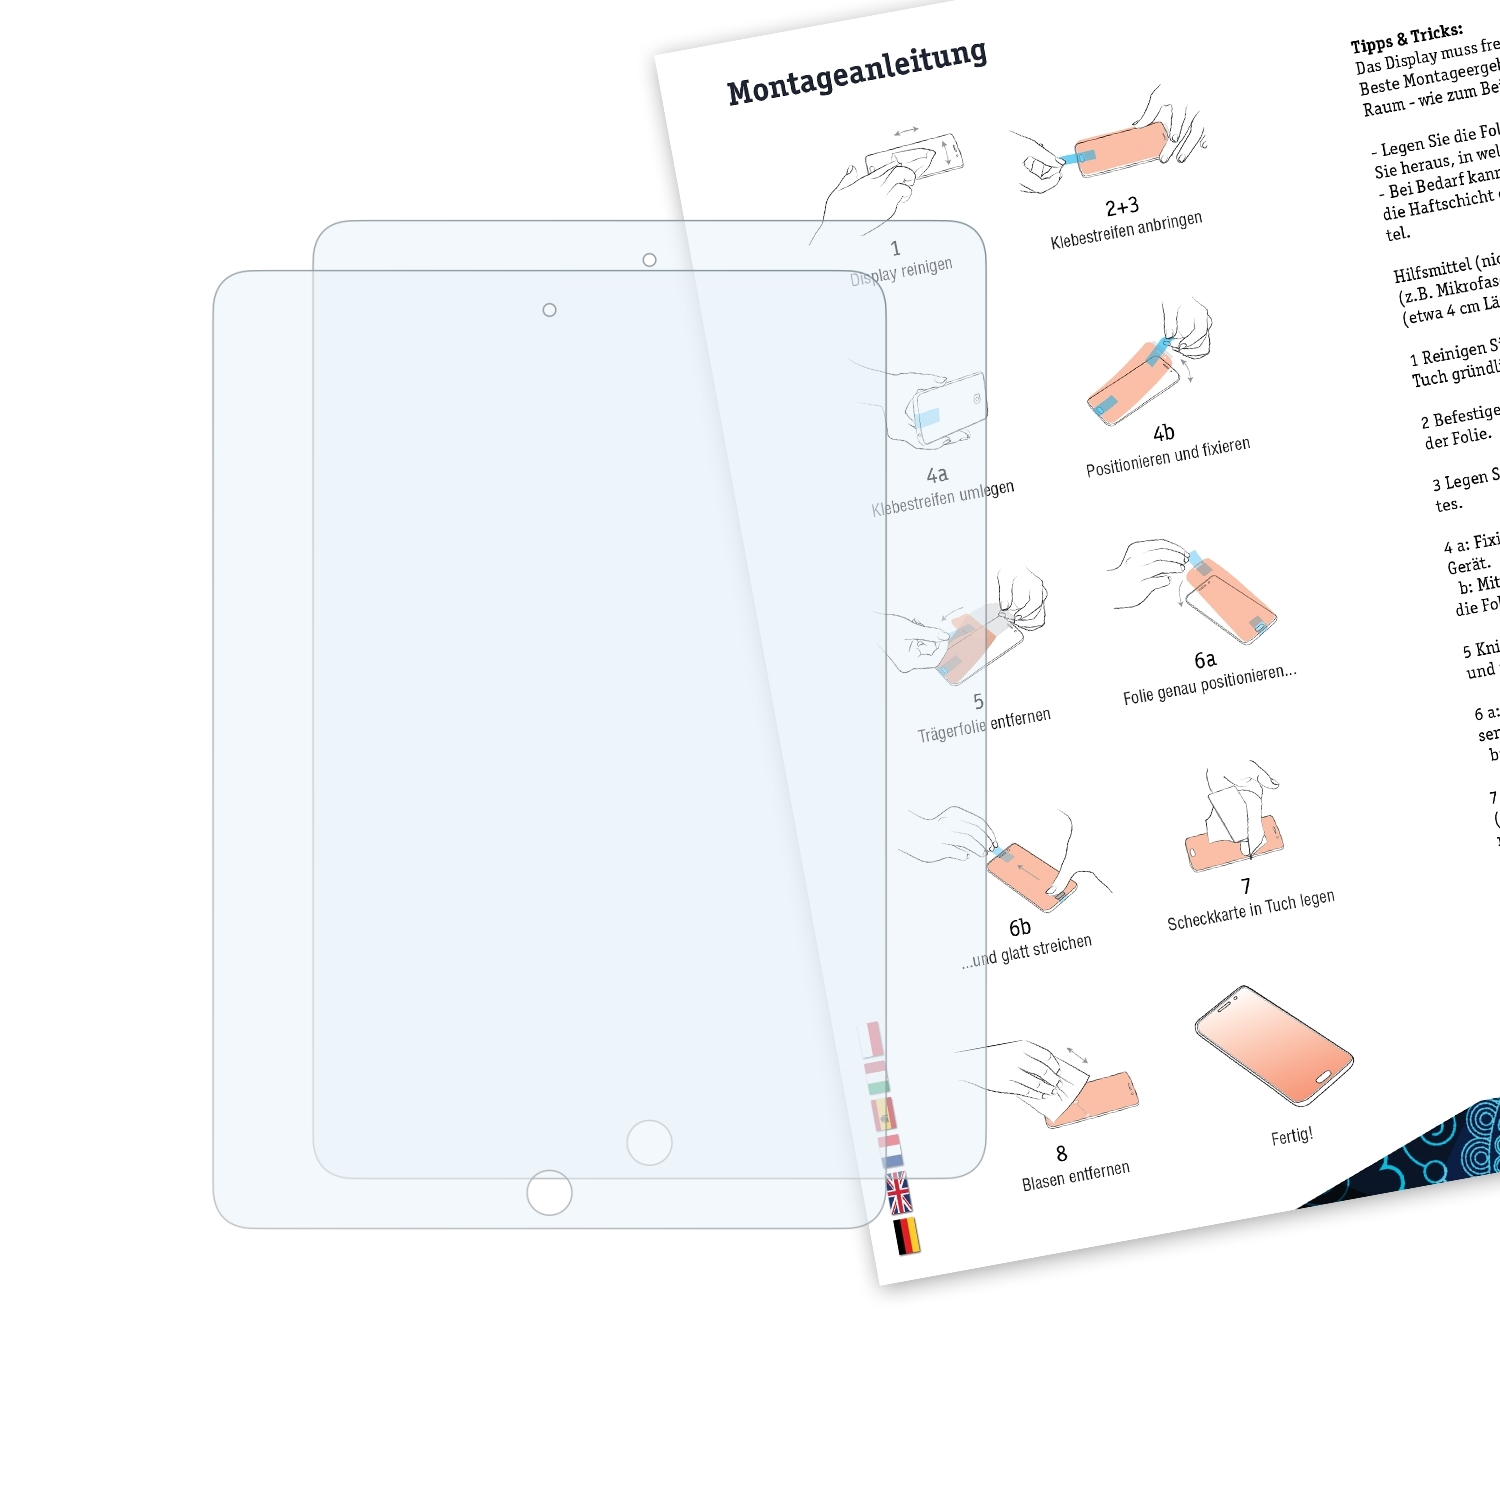 BRUNI 2x Basics-Clear 9,7) iPad Schutzfolie(für Apple Pro